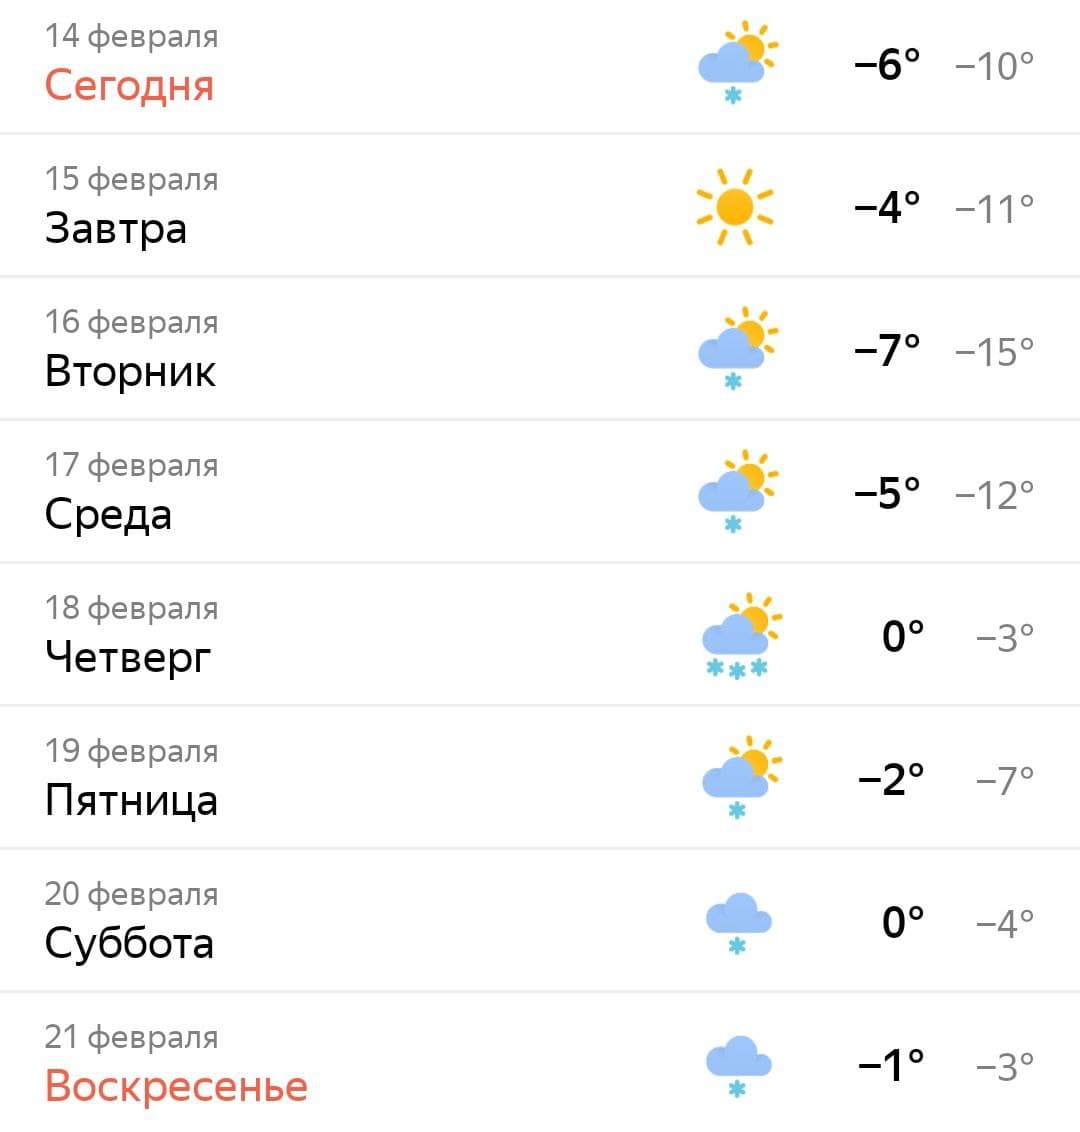 Прогноз погоды крым сегодня. Погода в Крыму сегодня-завтра. Температура в Крыму в феврале. Погода в Крыму на завтра.